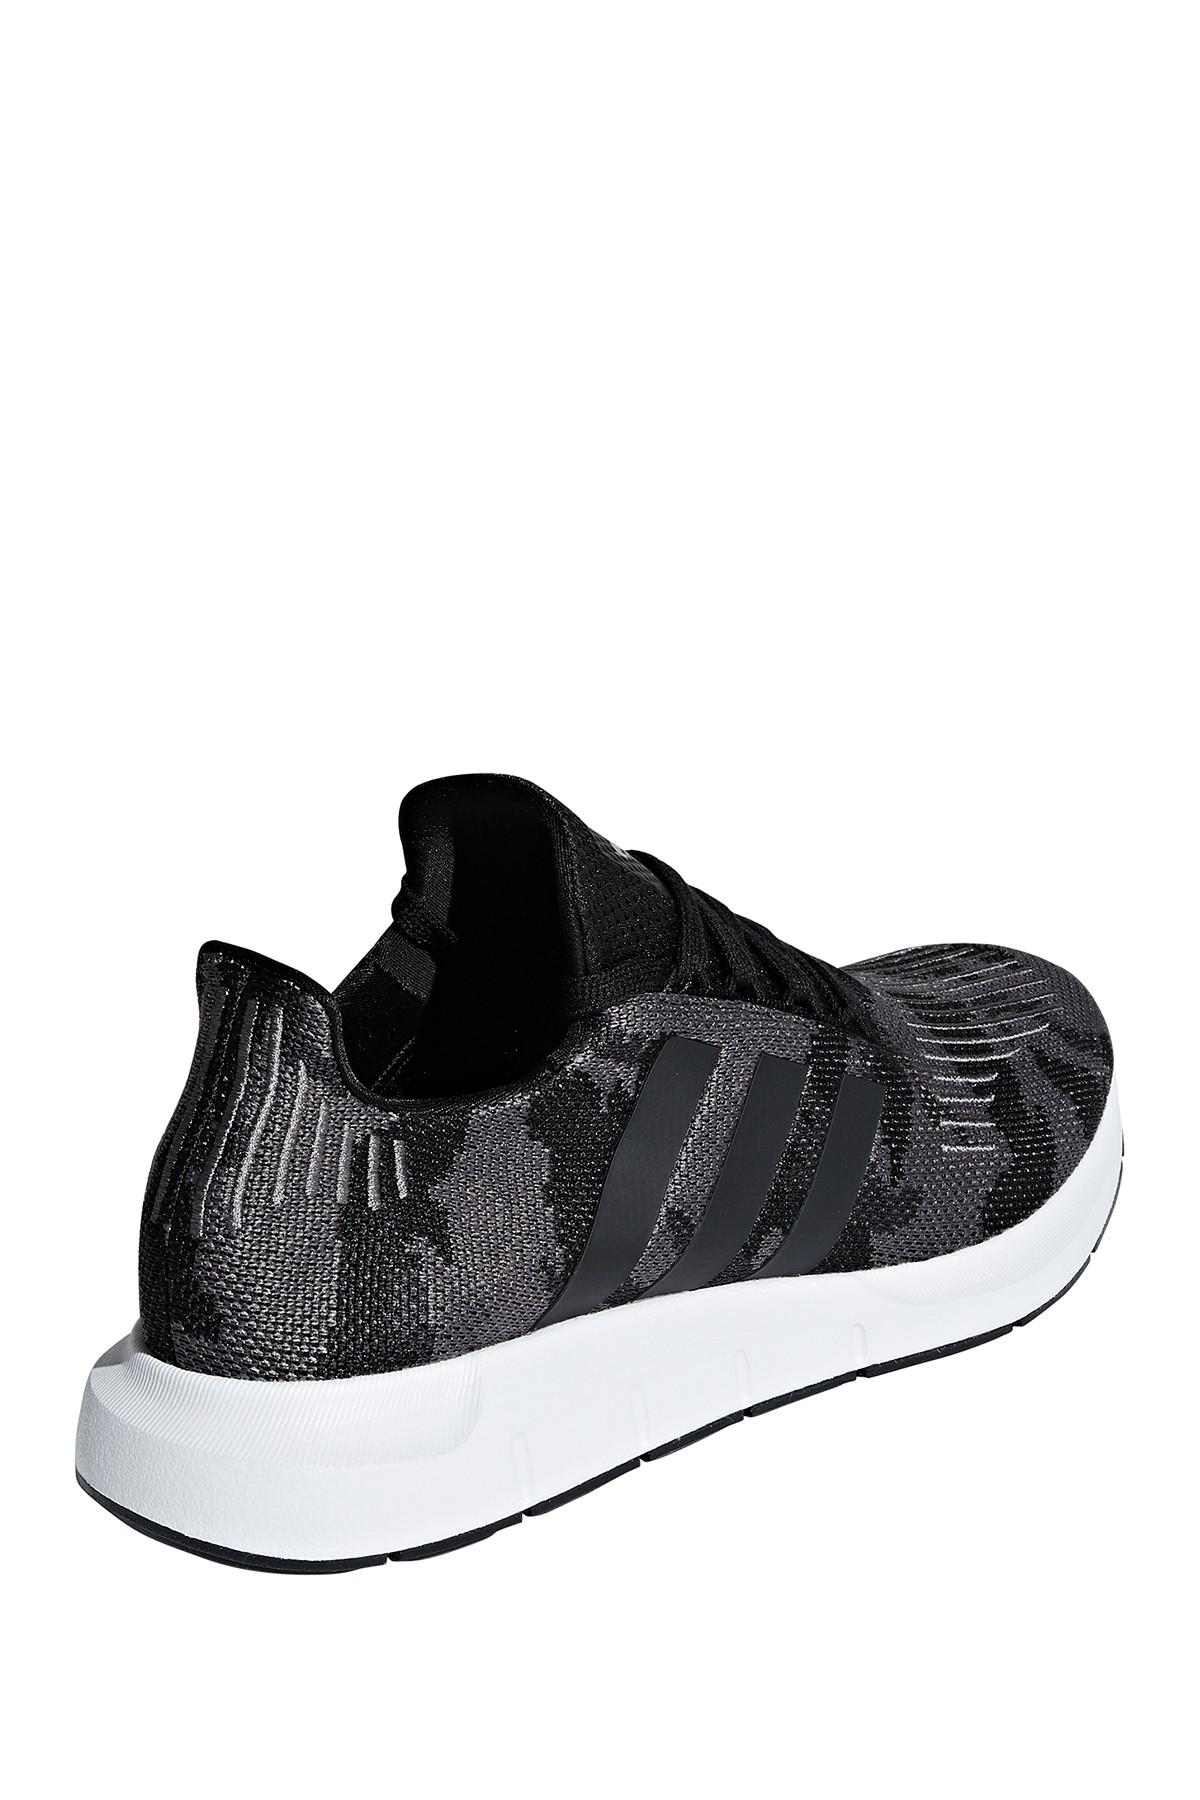 adidas Lace Swift Run Core Black Camo Mens Shoes for Men | Lyst